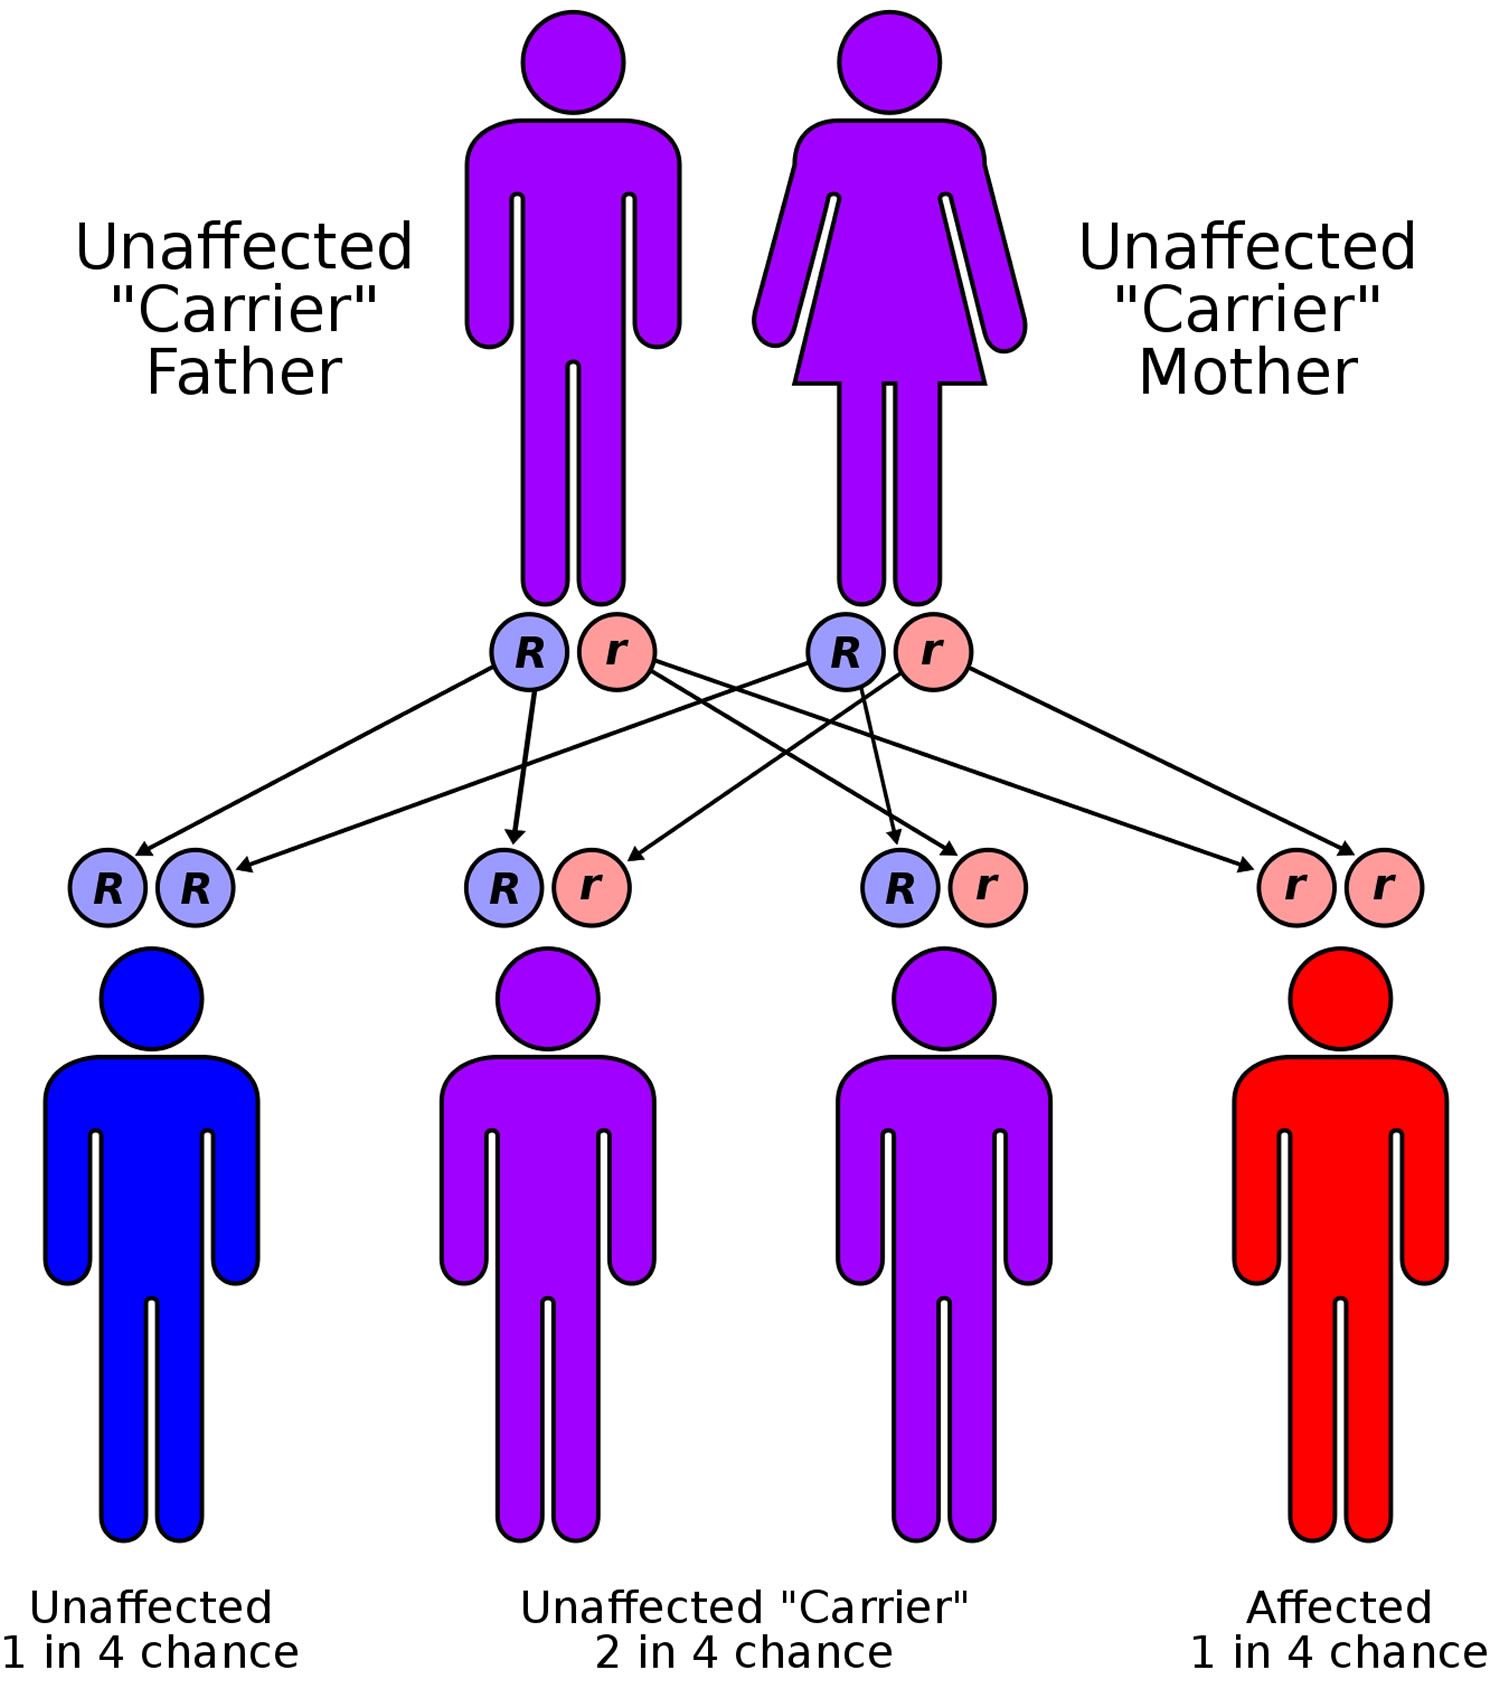 thalassemia inheritance pattern